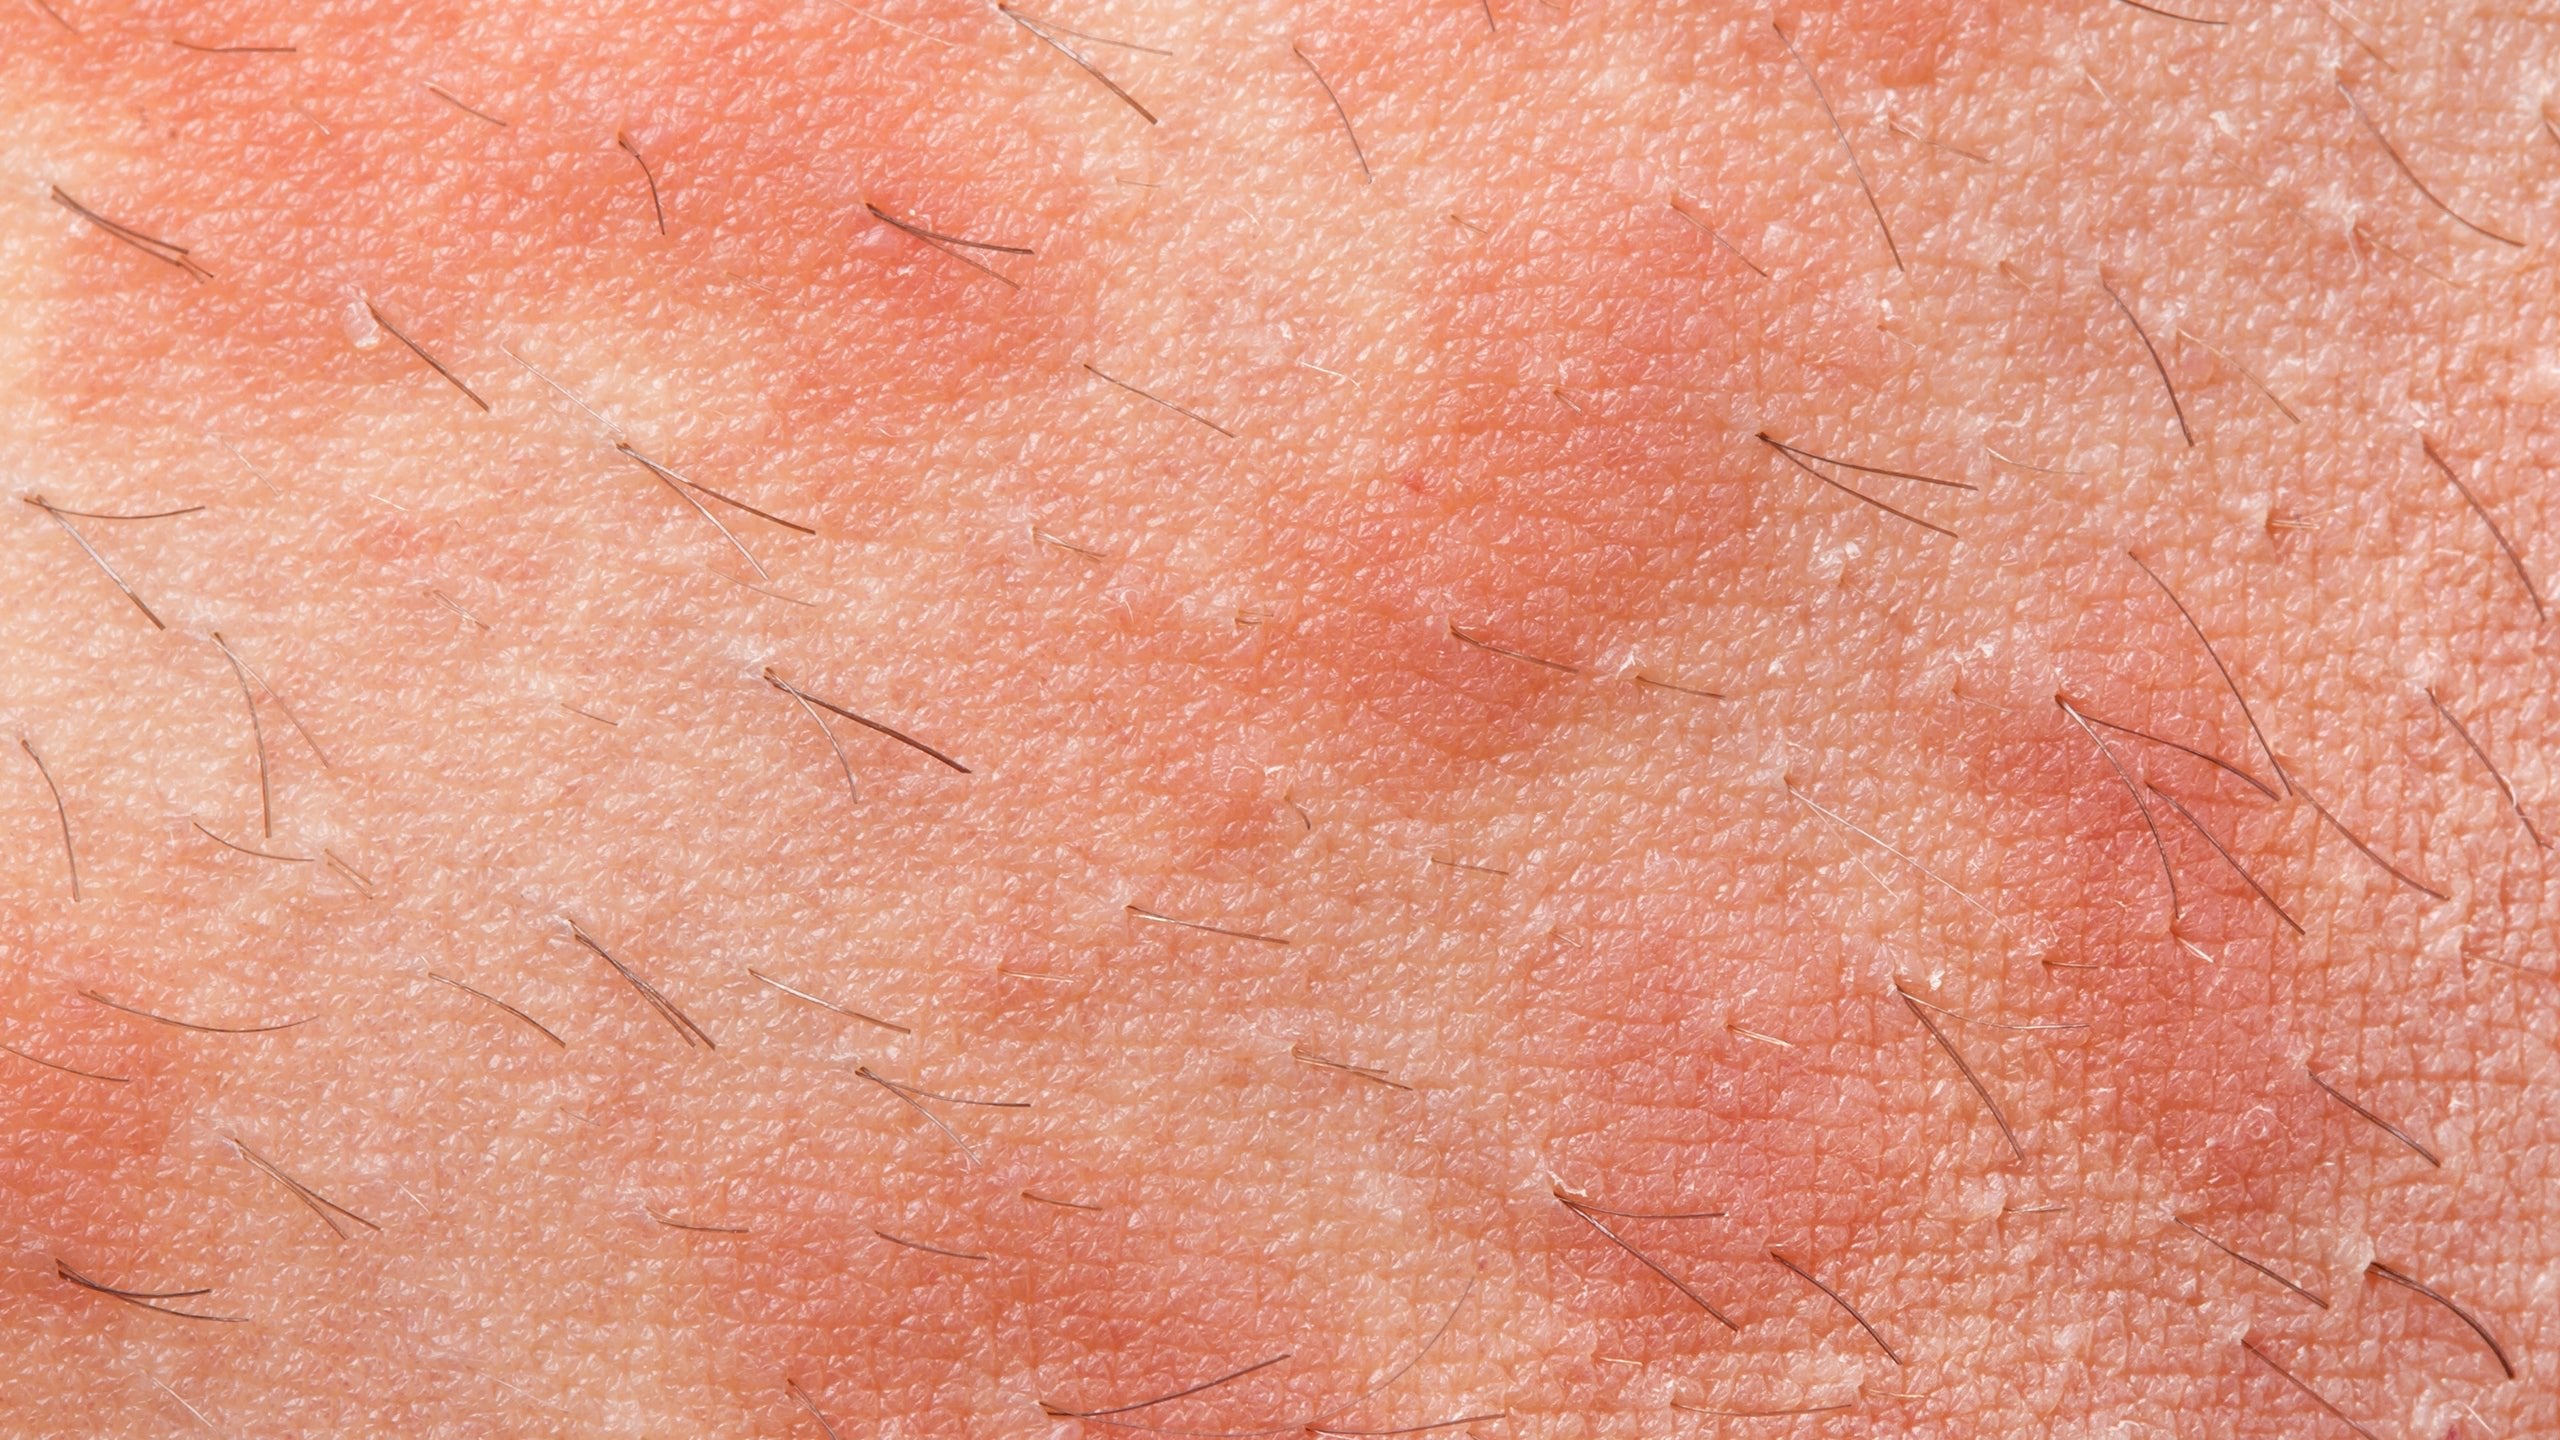 Types of Eczema: Atopic Dermatitis - Gladskin